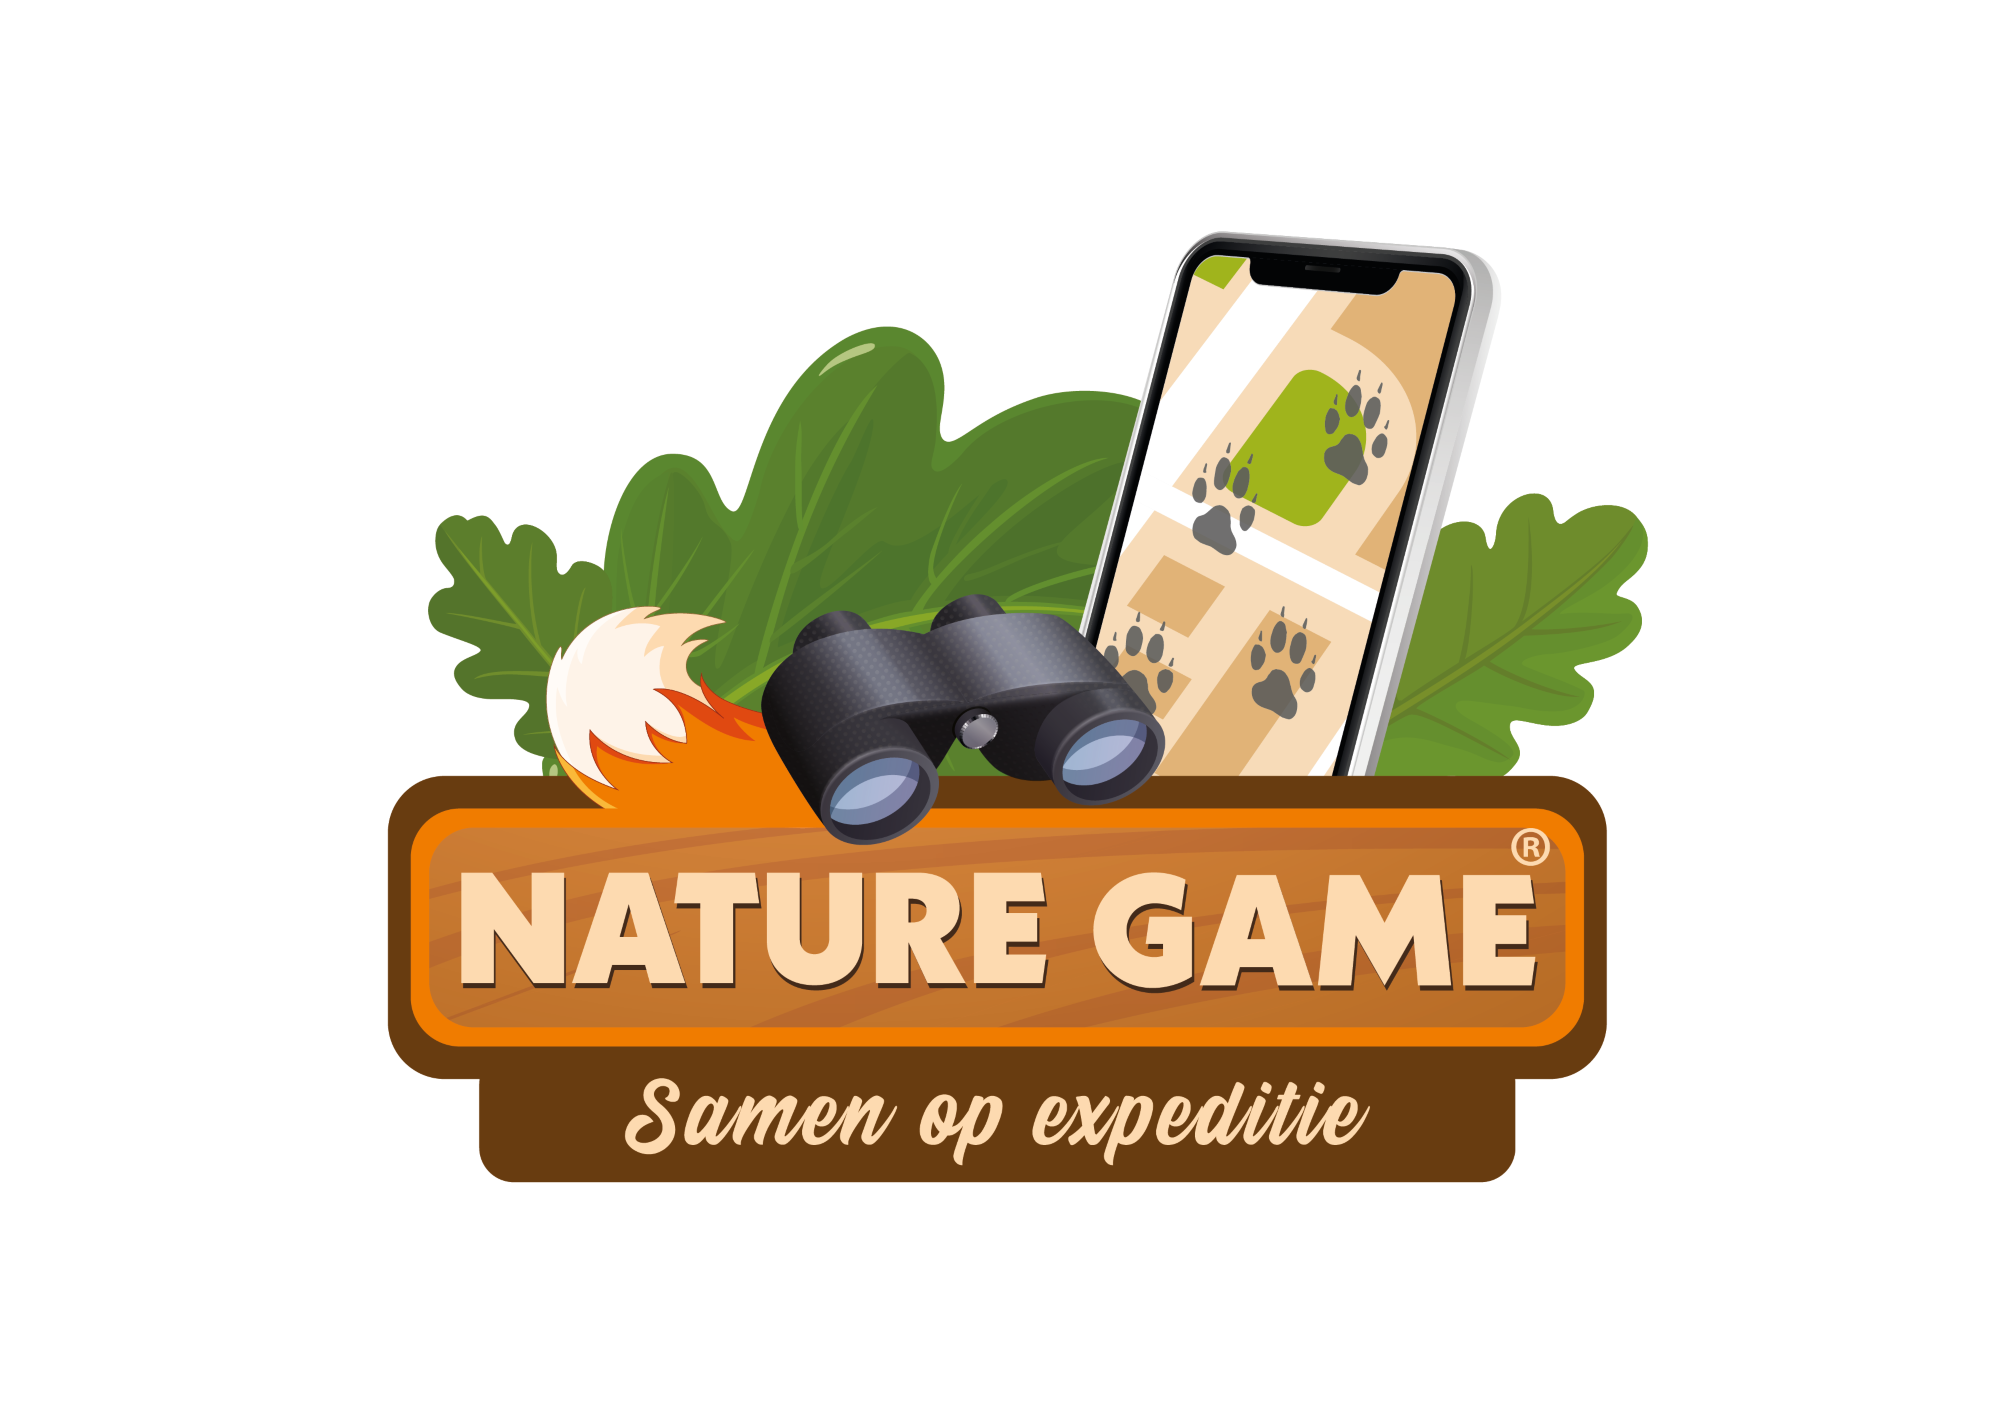 Nature Game